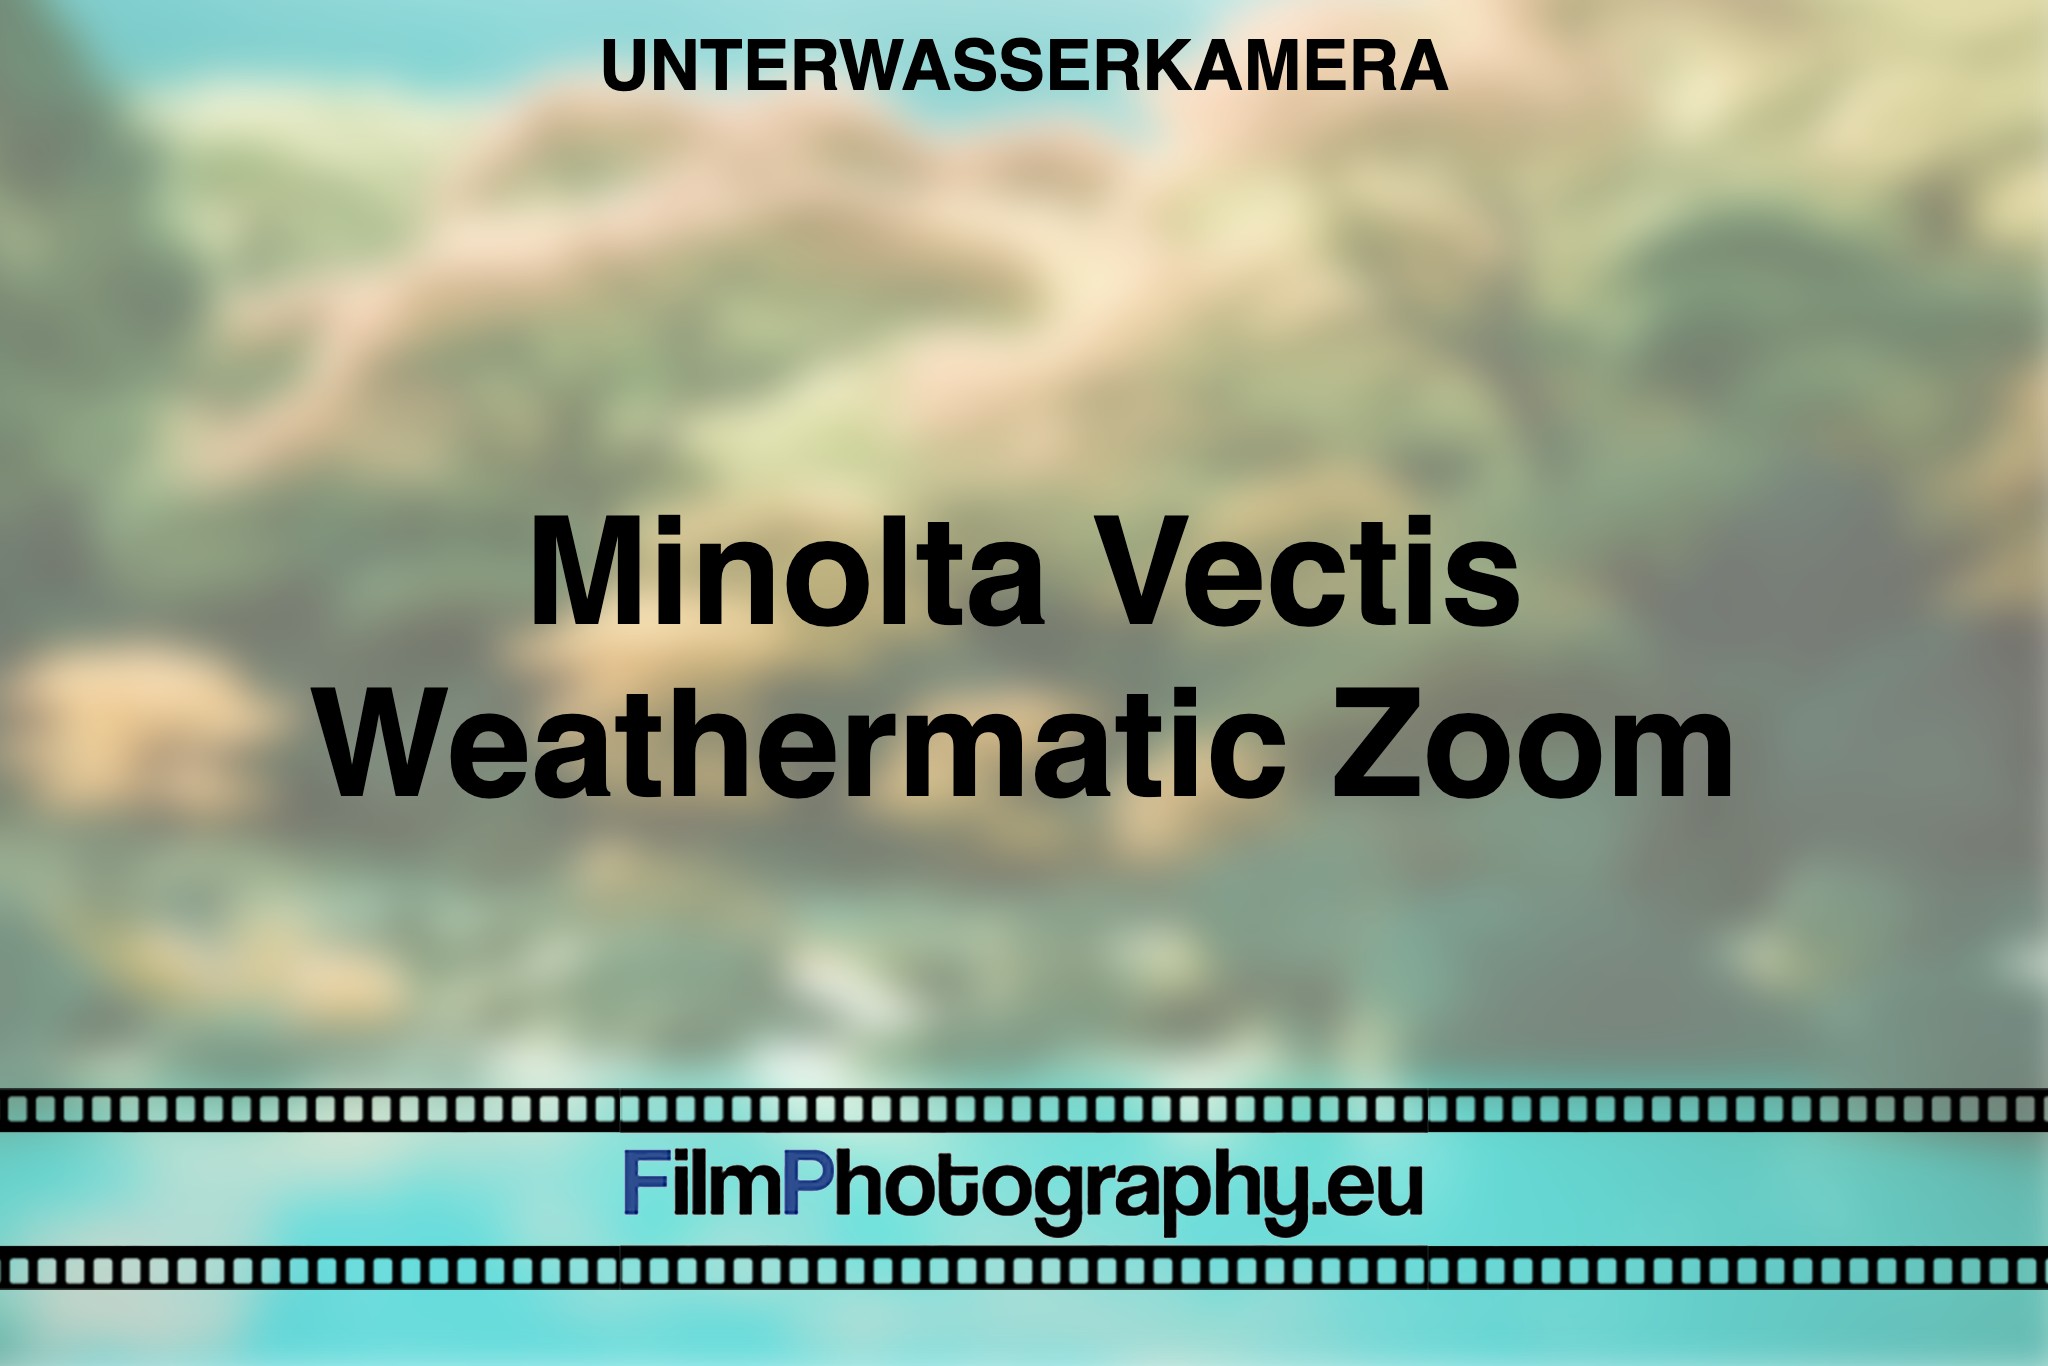 minolta-vectis-weathermatic-zoom-unterwasserkamera-bnv